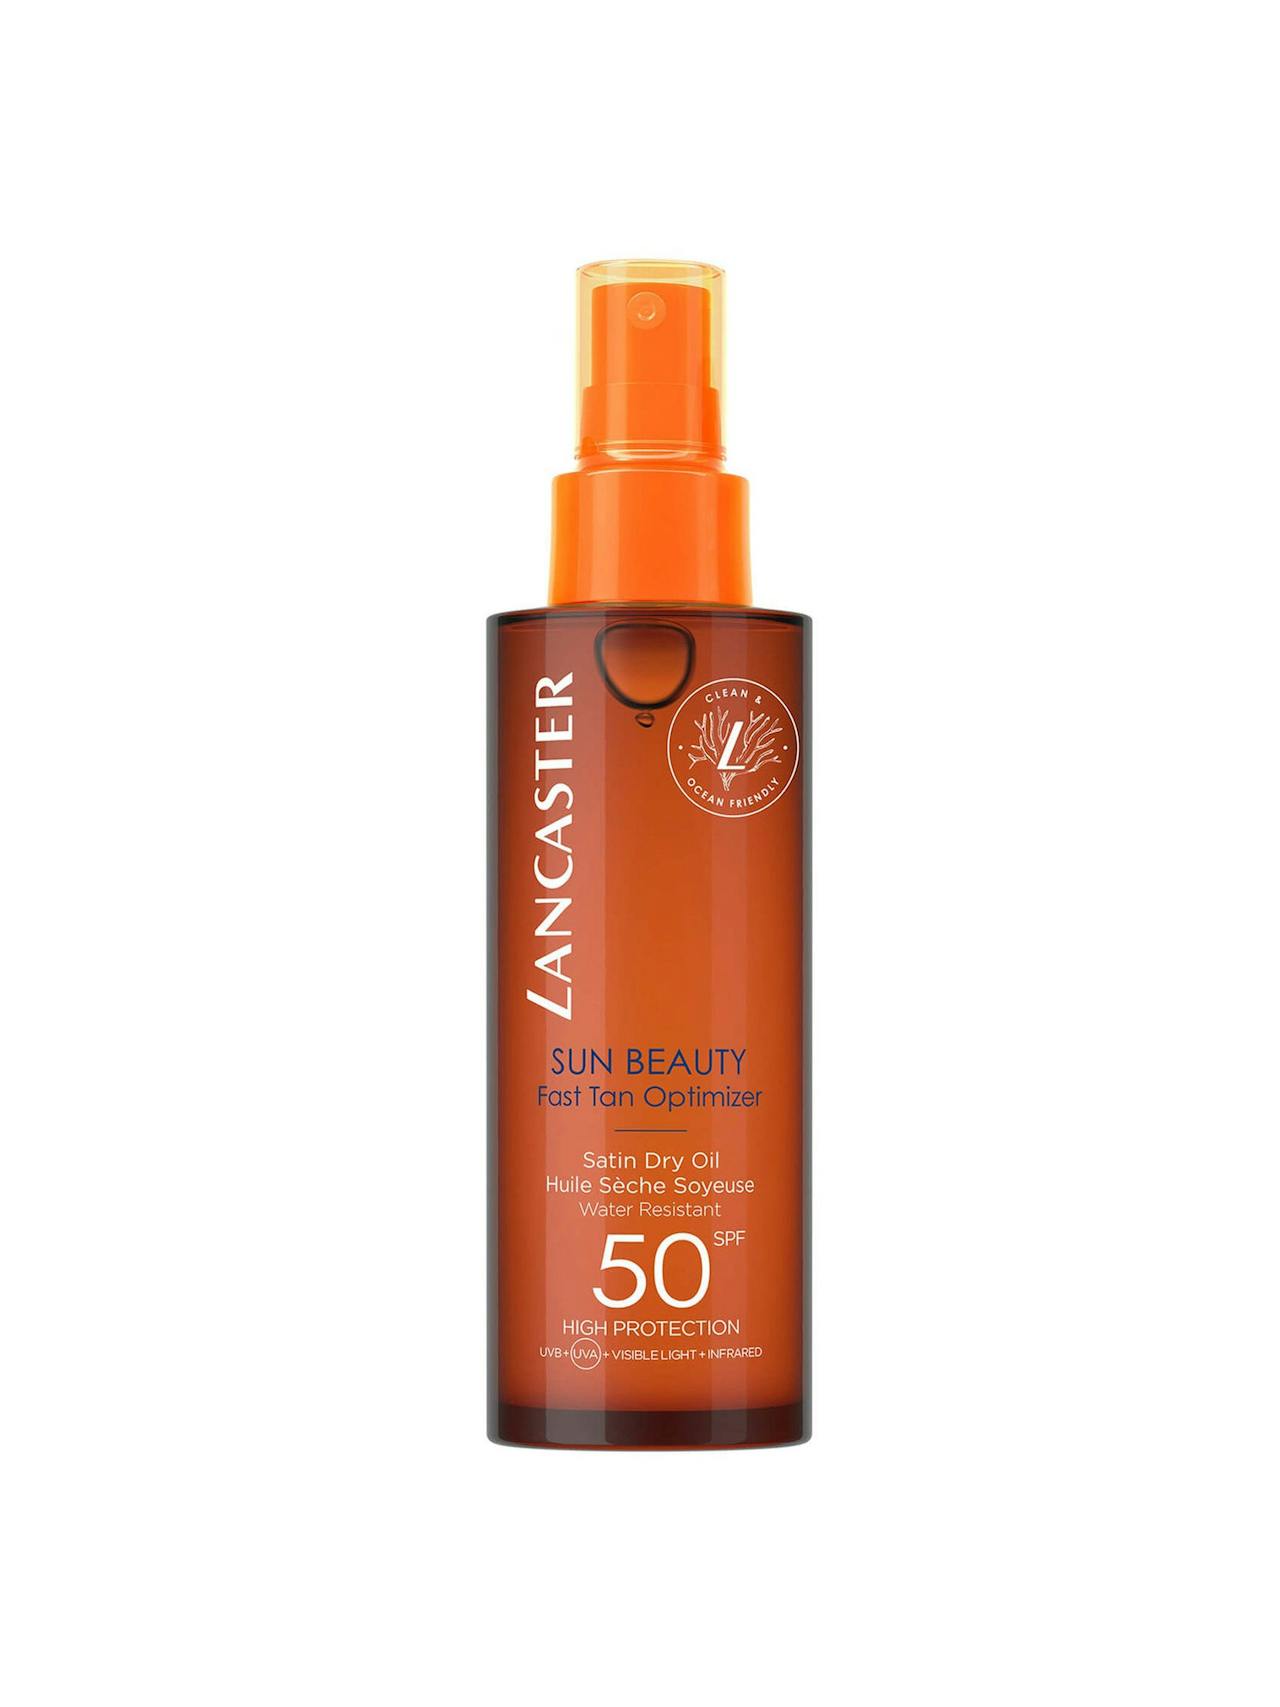 Sun beauty fast tan optimizer satin dry oil spf50